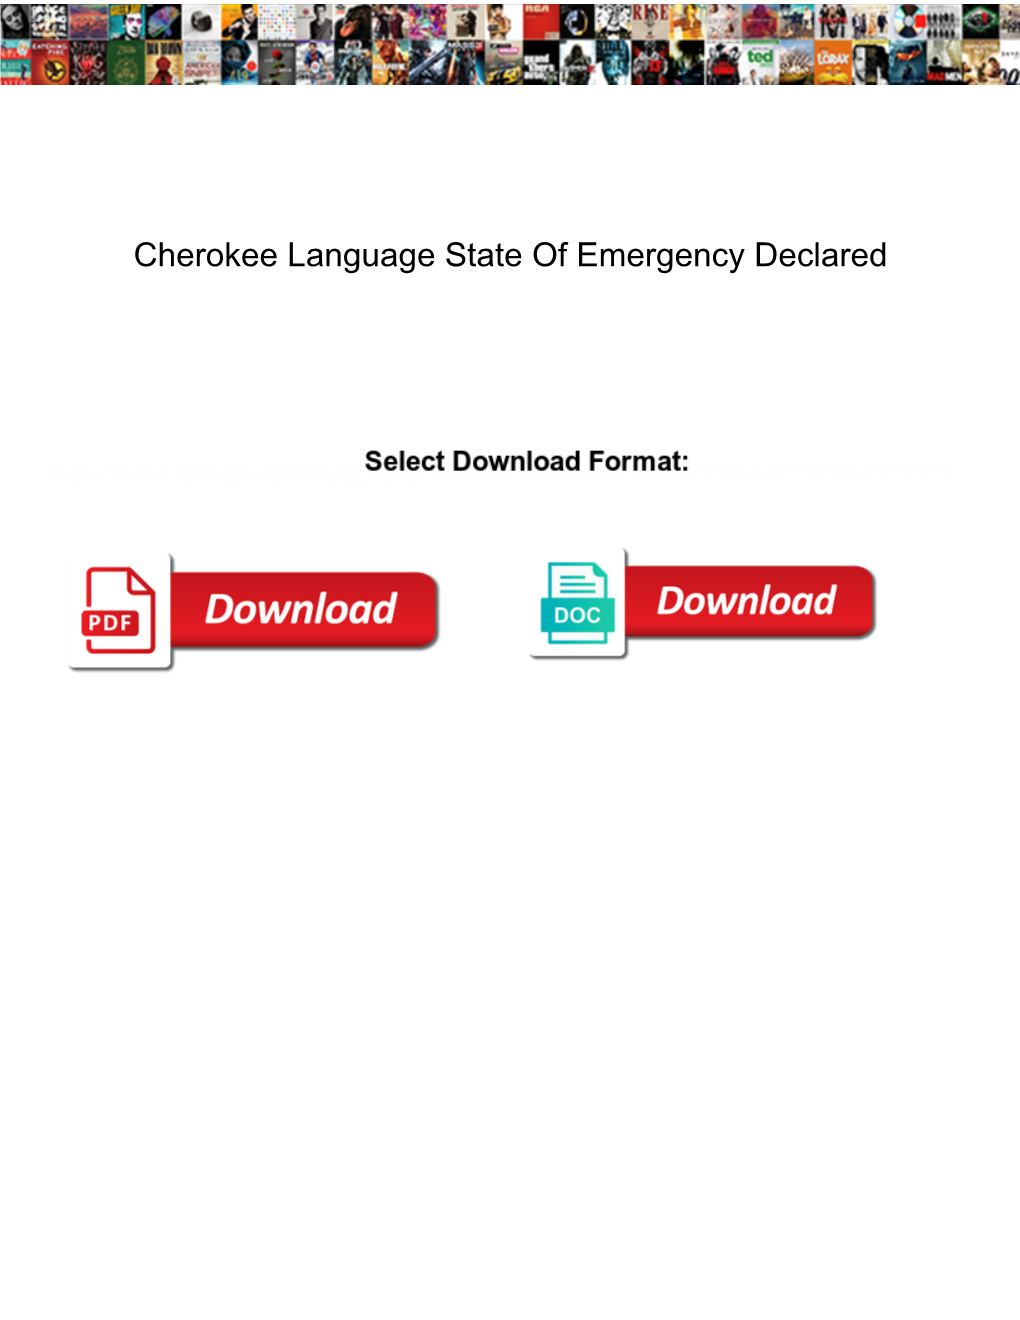 Cherokee Language State of Emergency Declared